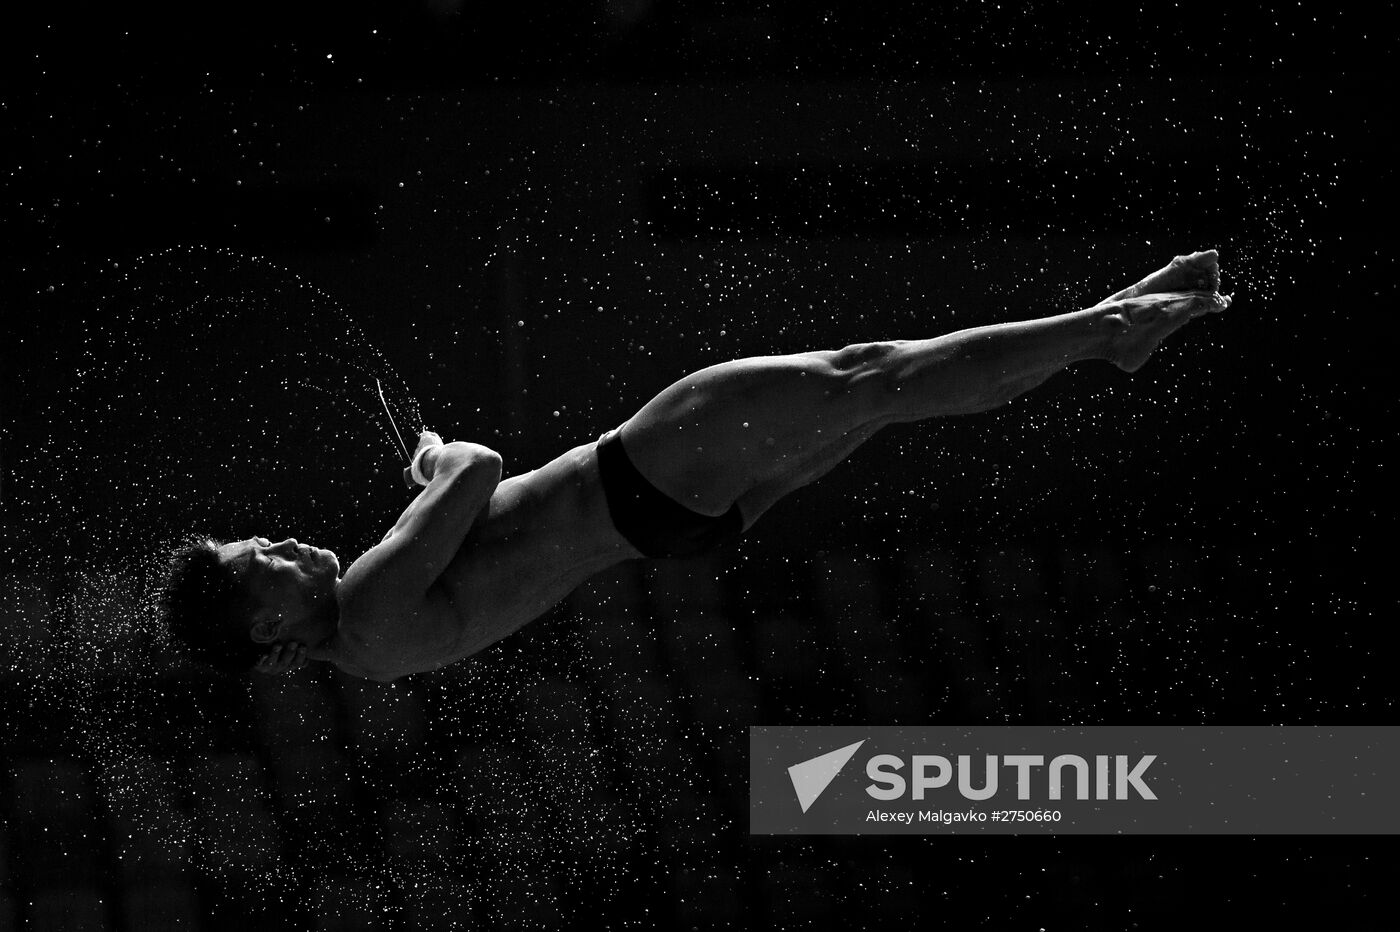 FINA 2015 World Championships. Men's 10 m Platform Diving Finals